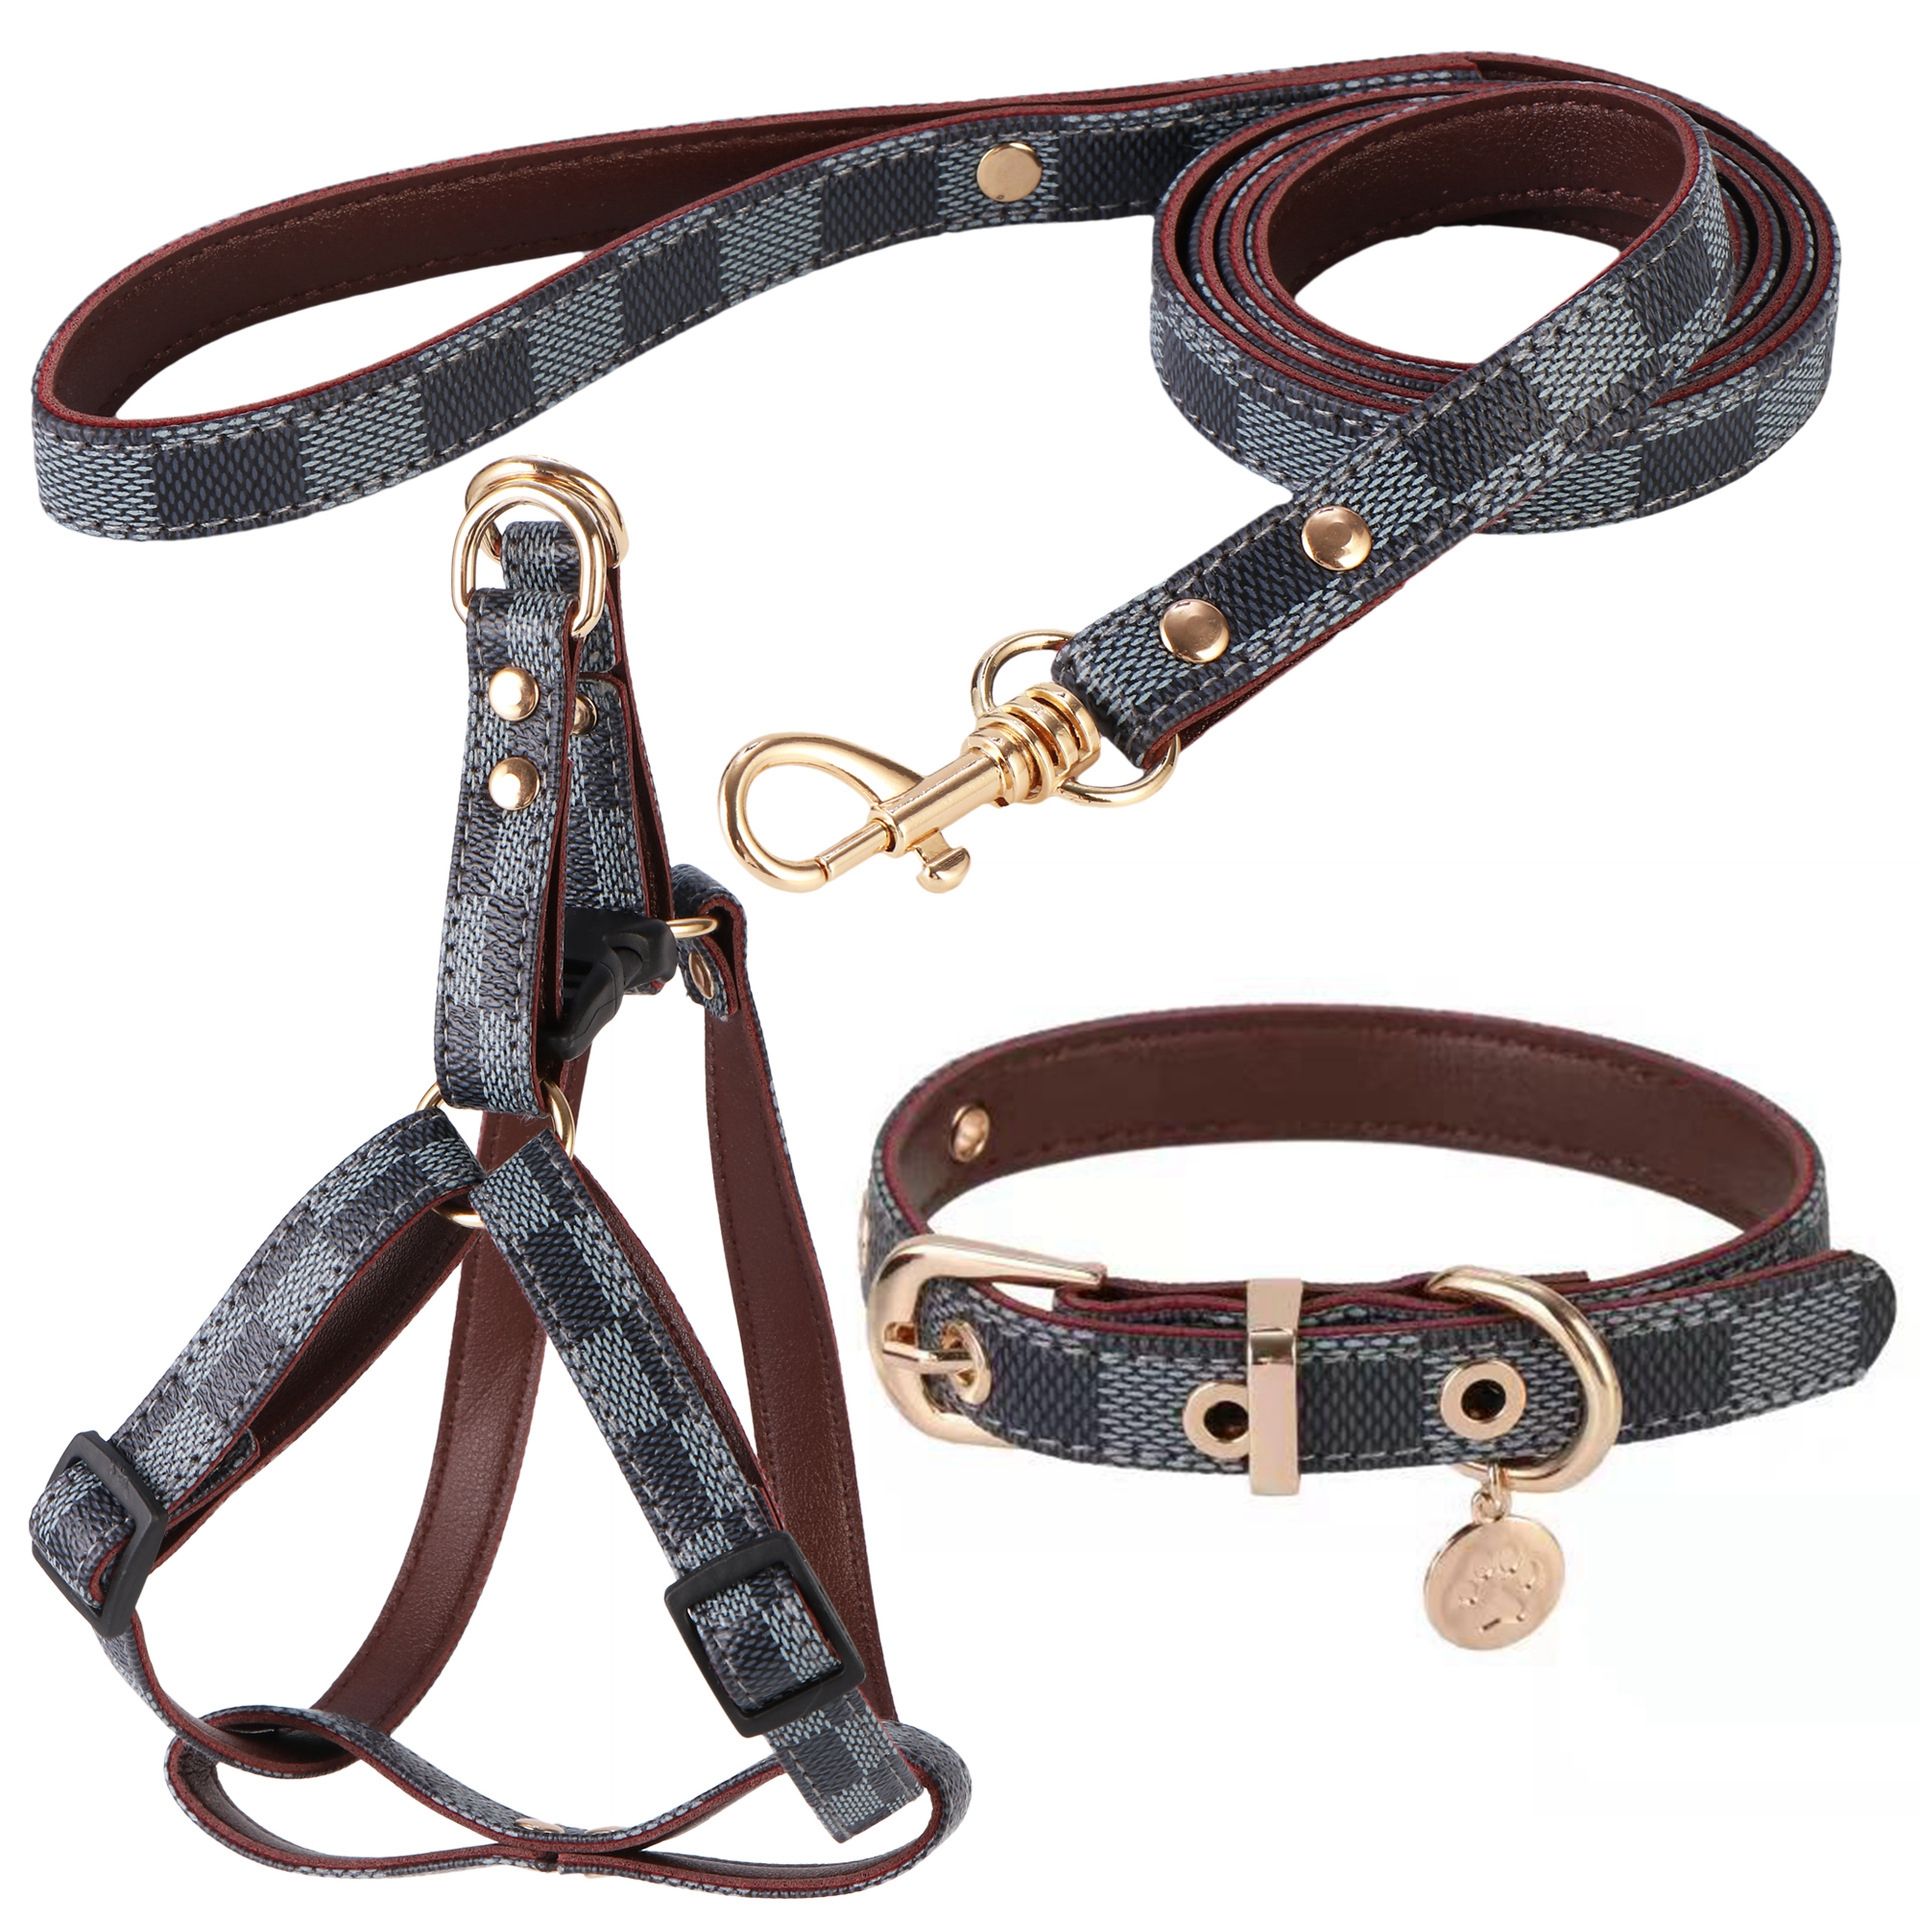 #3 collars+leash+harness